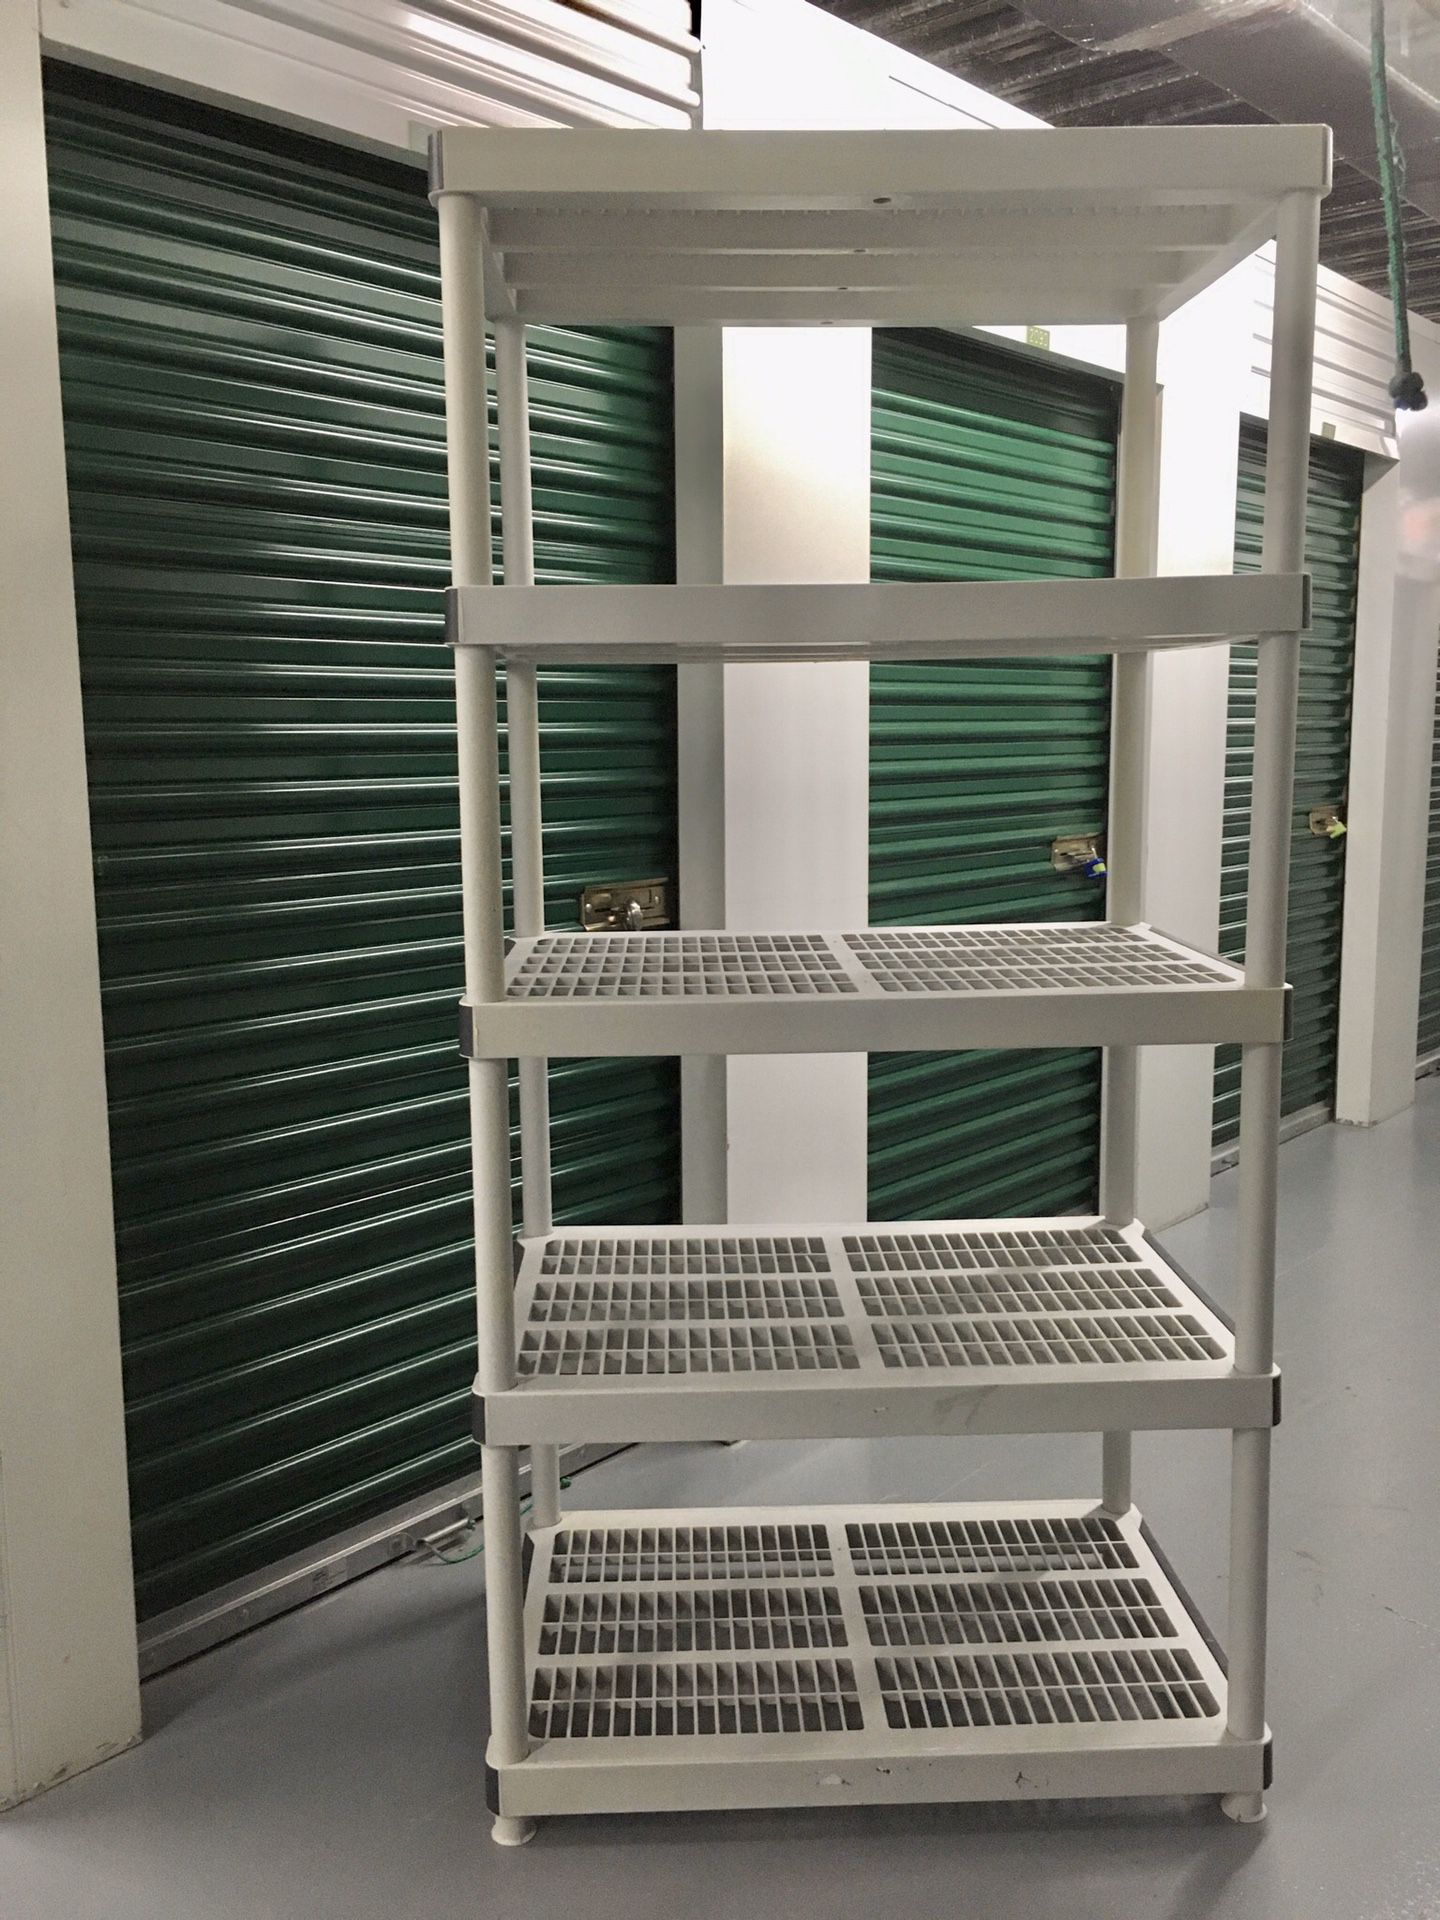 5 Tier Heavy Duty Plastic Utility Storage Shelf in Great Condition